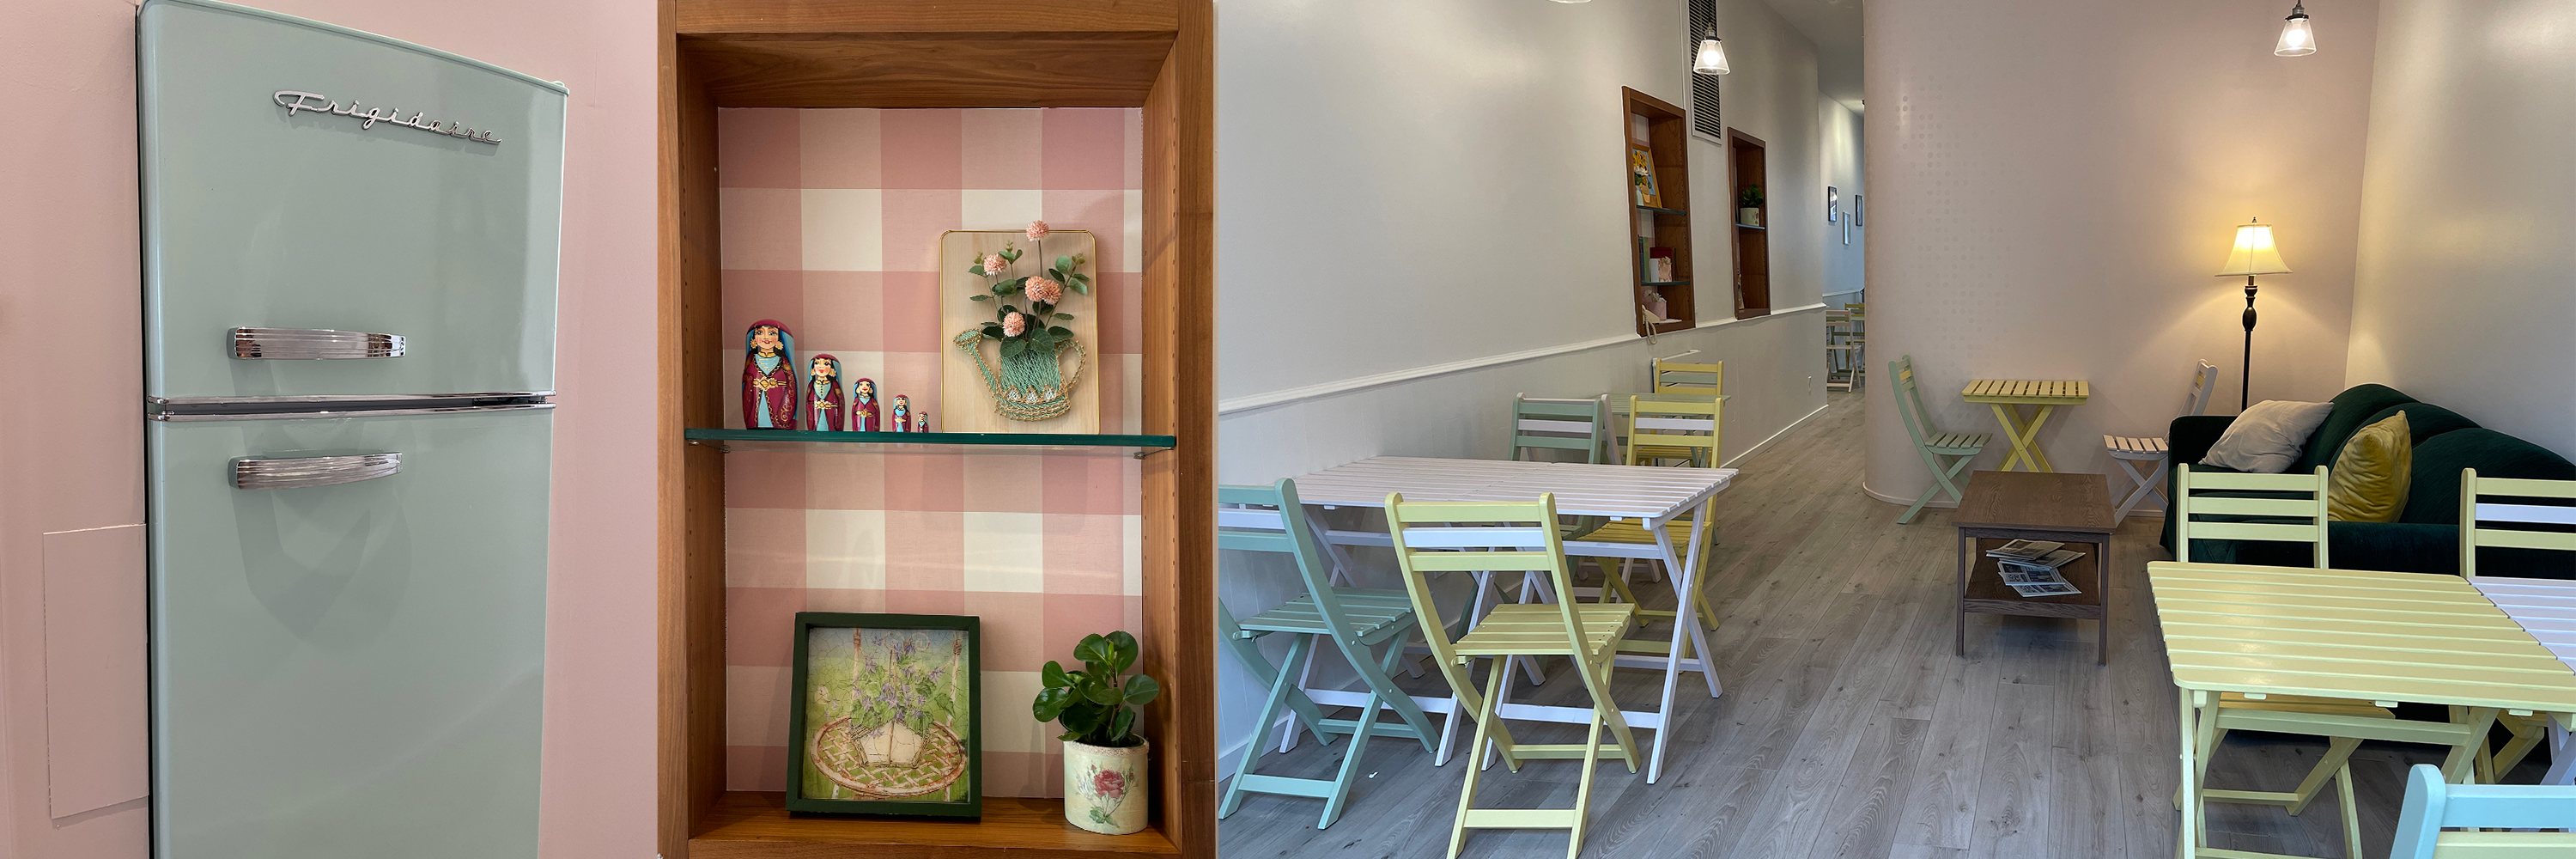 Retro fridge, handmade decor and bright spacious dining area at Nana's Creperie